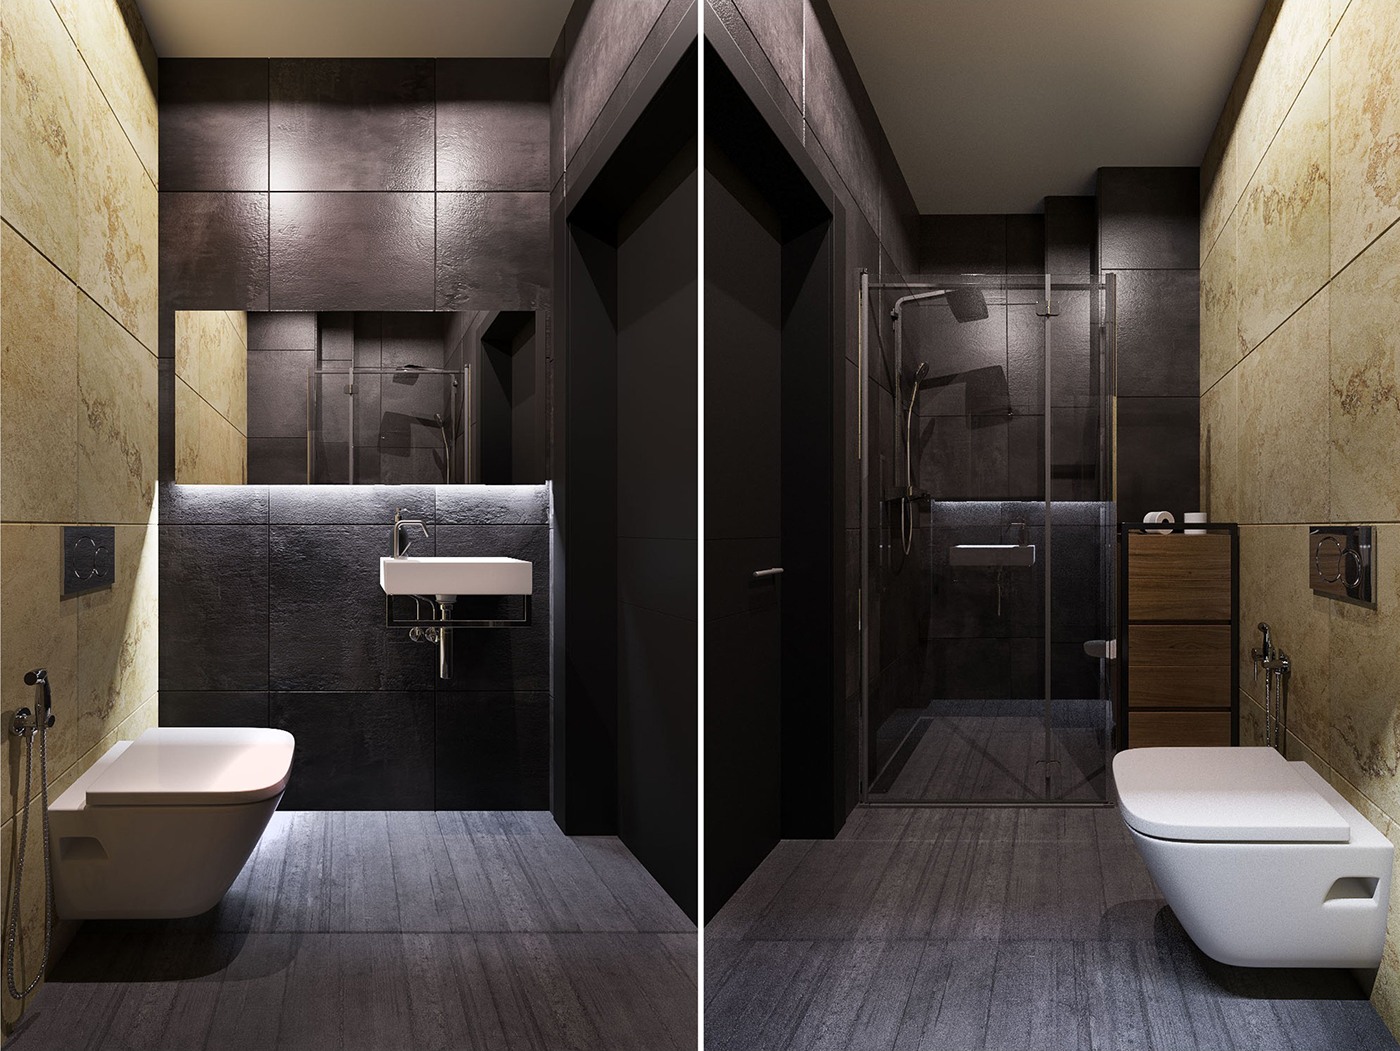 Tile bathroom design "width =" 1400 "height =" 1051 "srcset =" https://mileray.com/wp-content/uploads/2020/05/1588515659_16_The-Best-Arrangement-Spacious-Modern-Bathroom-Designs-Decorated-By-Tile.jpg 1400w, https://mileray.com/ wp-content / uploads / 2016/10 / Anna-Kolezneva-300x225.jpg 300w, https://mileray.com/wp-content/uploads/2016/10/Anna-Kolezneva-768x577.jpg 768w, https: // mileray.com/wp-content/uploads/2016/10/Anna-Kolezneva-1024x769.jpg 1024w, https://mileray.com/wp-content/uploads/2016/10/Anna-Kolezneva-80x60.jpg 80w, https://mileray.com/wp-content/uploads/2016/10/Anna-Kolezneva-265x198.jpg 265w, https://mileray.com/wp-content/uploads/2016/10/Anna-Kolezneva-696x522 .jpg 696w, https://mileray.com/wp-content/uploads/2016/10/Anna-Kolezneva-1068x802.jpg 1068w, https://mileray.com/wp-content/uploads/2016/10/Anna -Kolezneva-559x420.jpg 559w "sizes =" (maximum width: 1400px) 100vw, 1400px